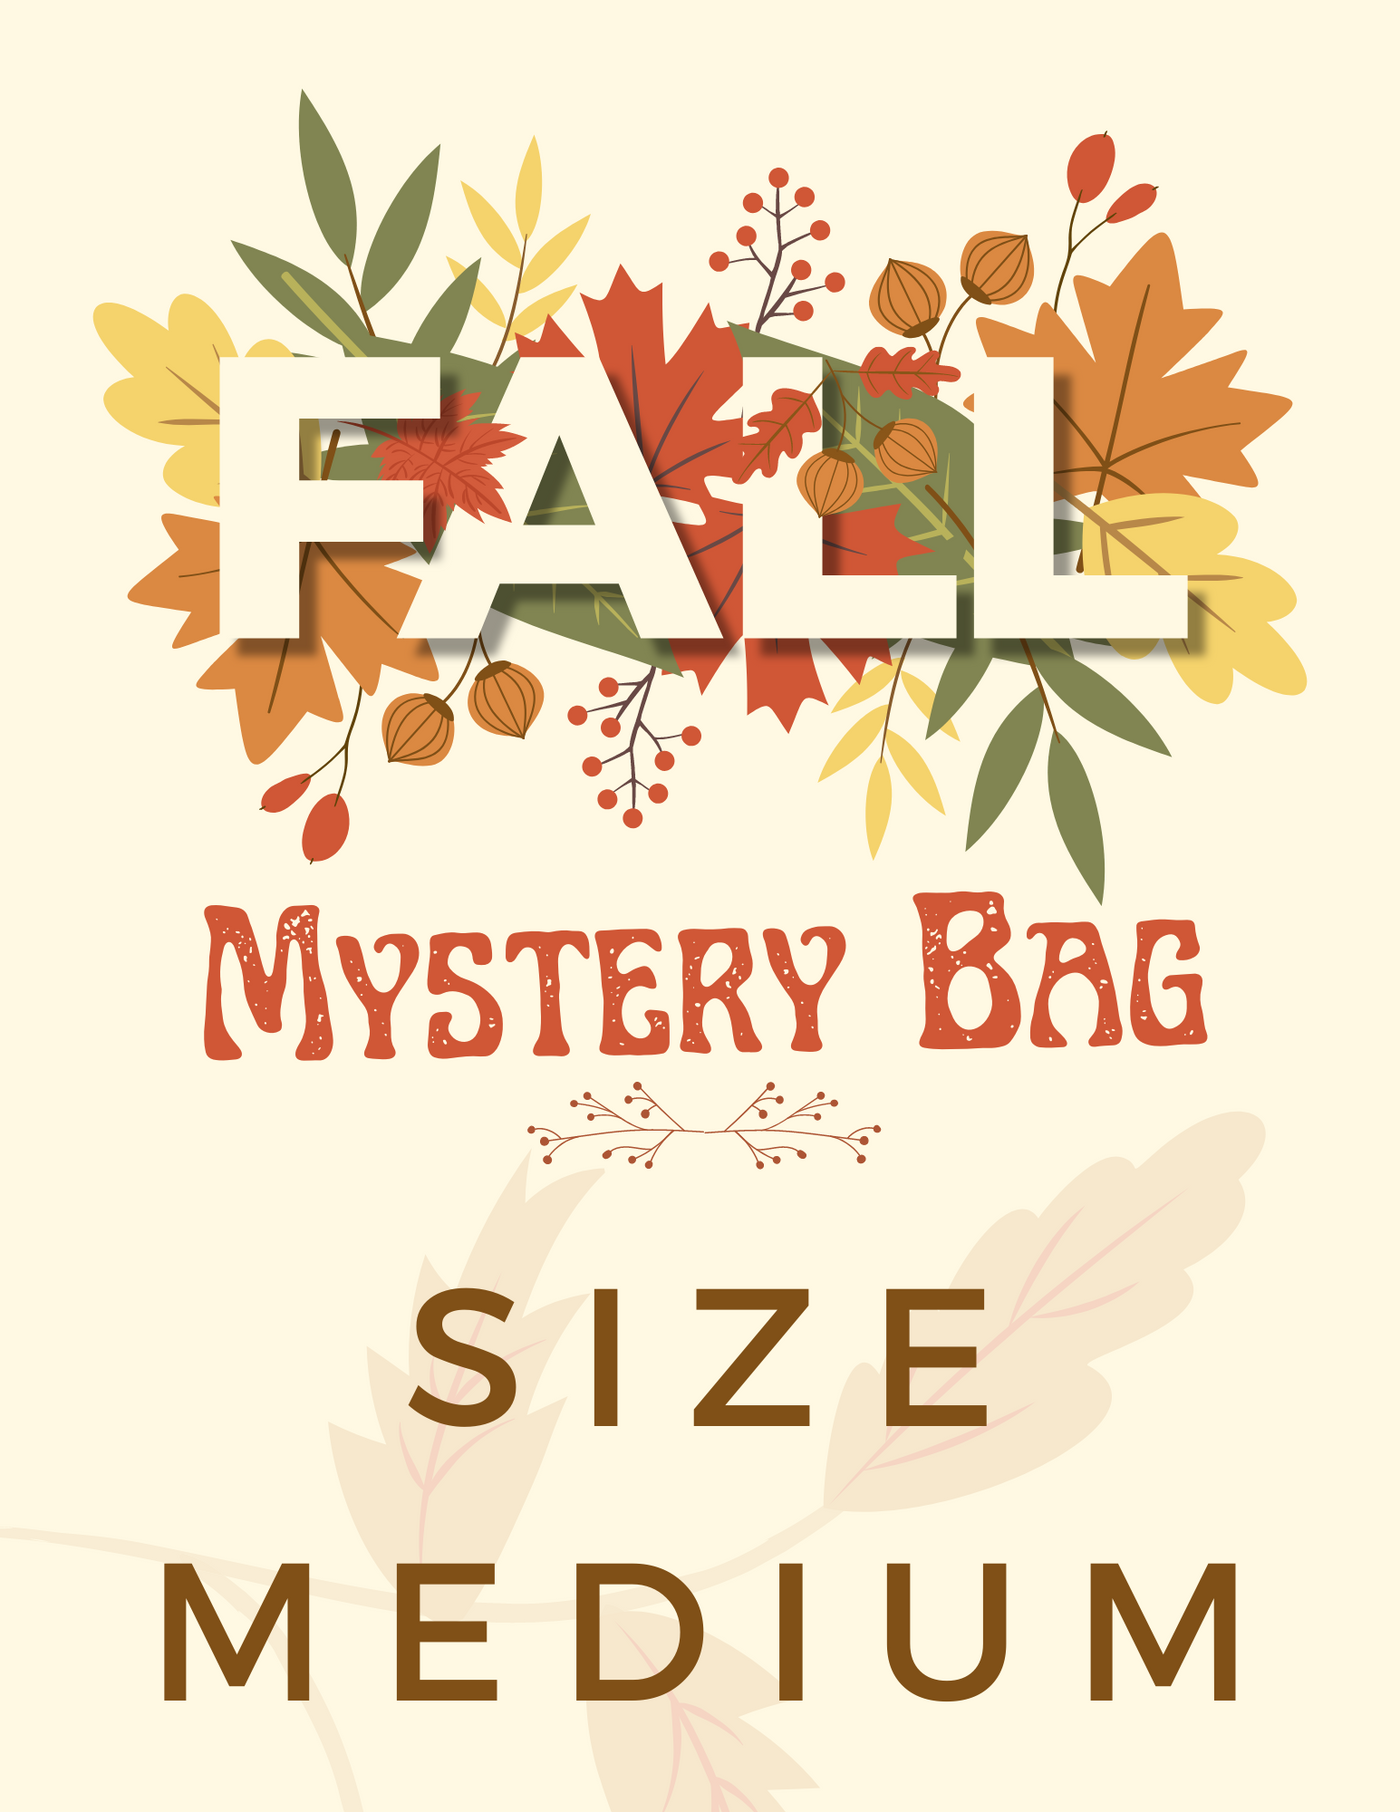 MEDIUM - Mystery bag